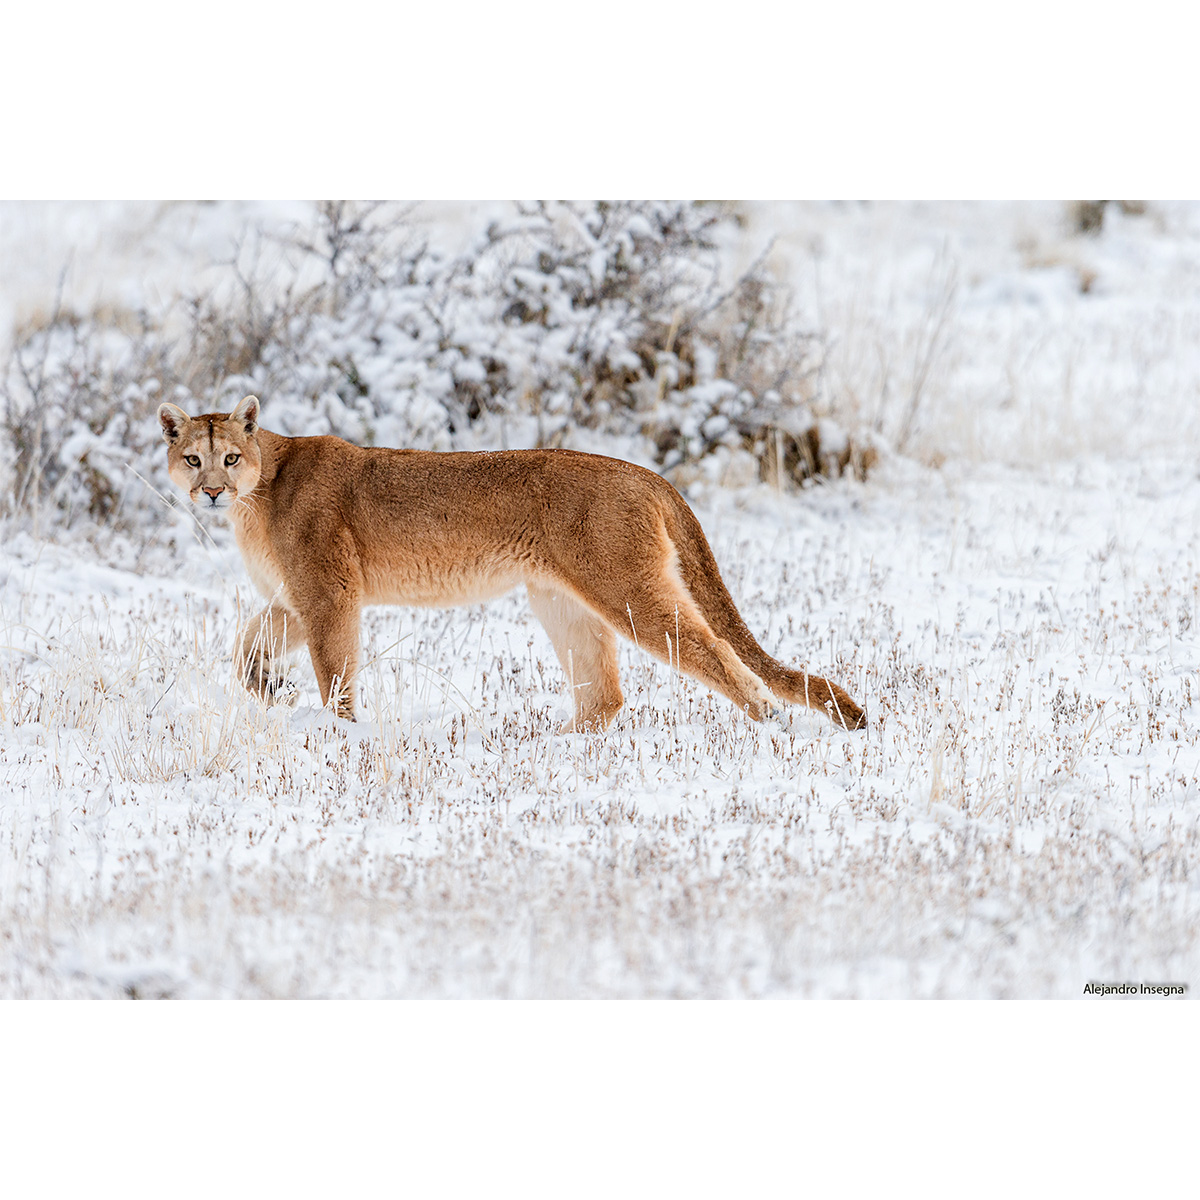 Пума / Горный лев / Кугуар (Puma concolor) Фото №5